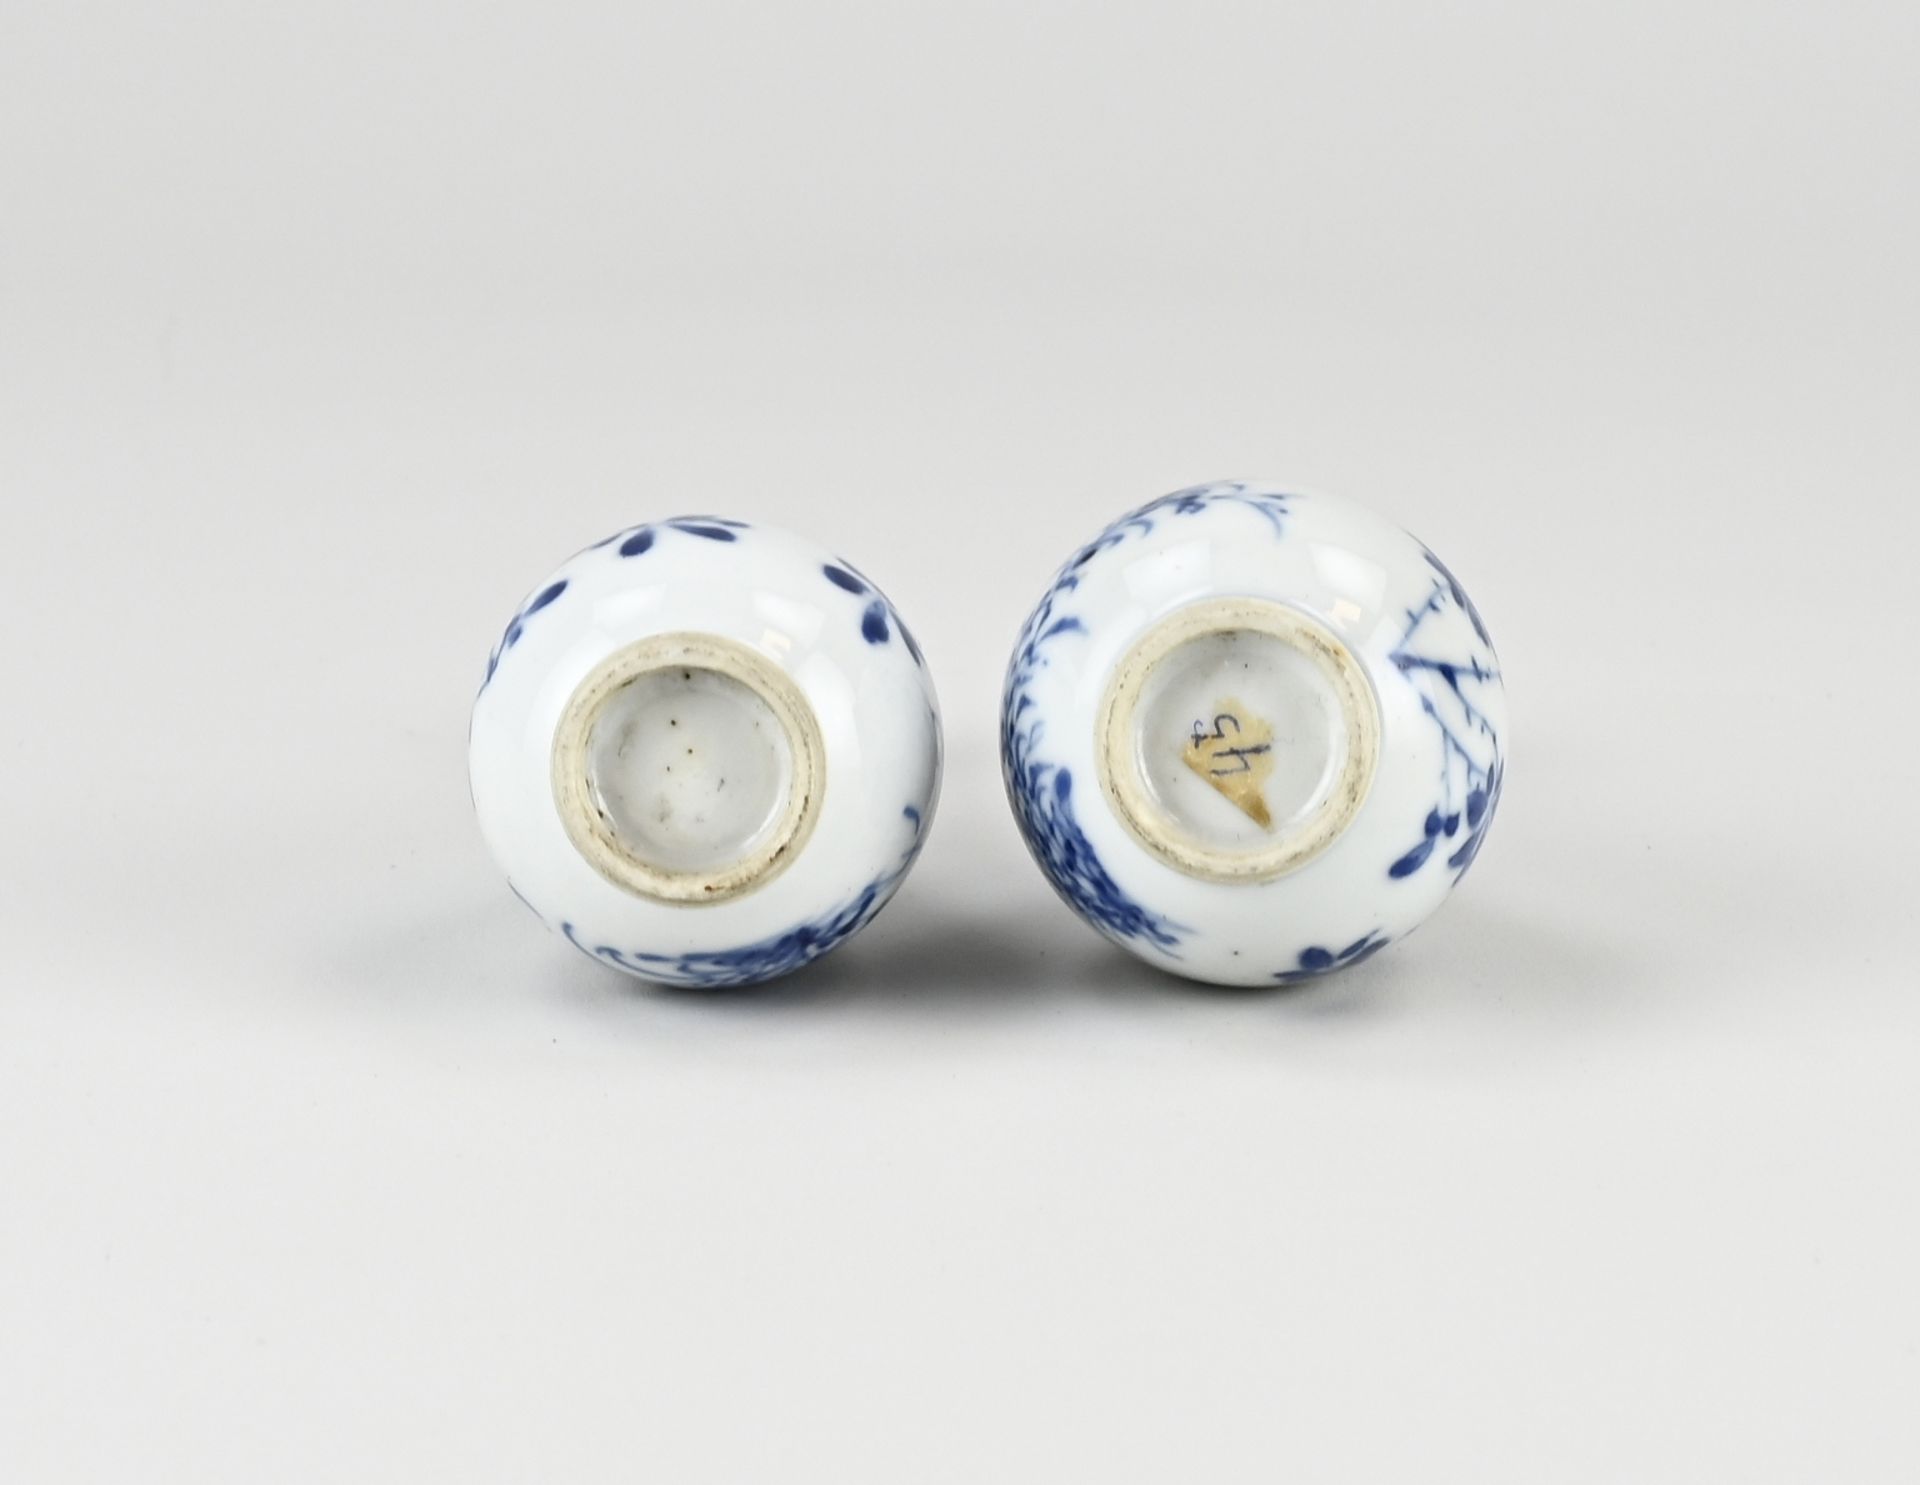 Two 18th century Chinese Kang Xi knob vases, H 11 cm. - Image 2 of 2